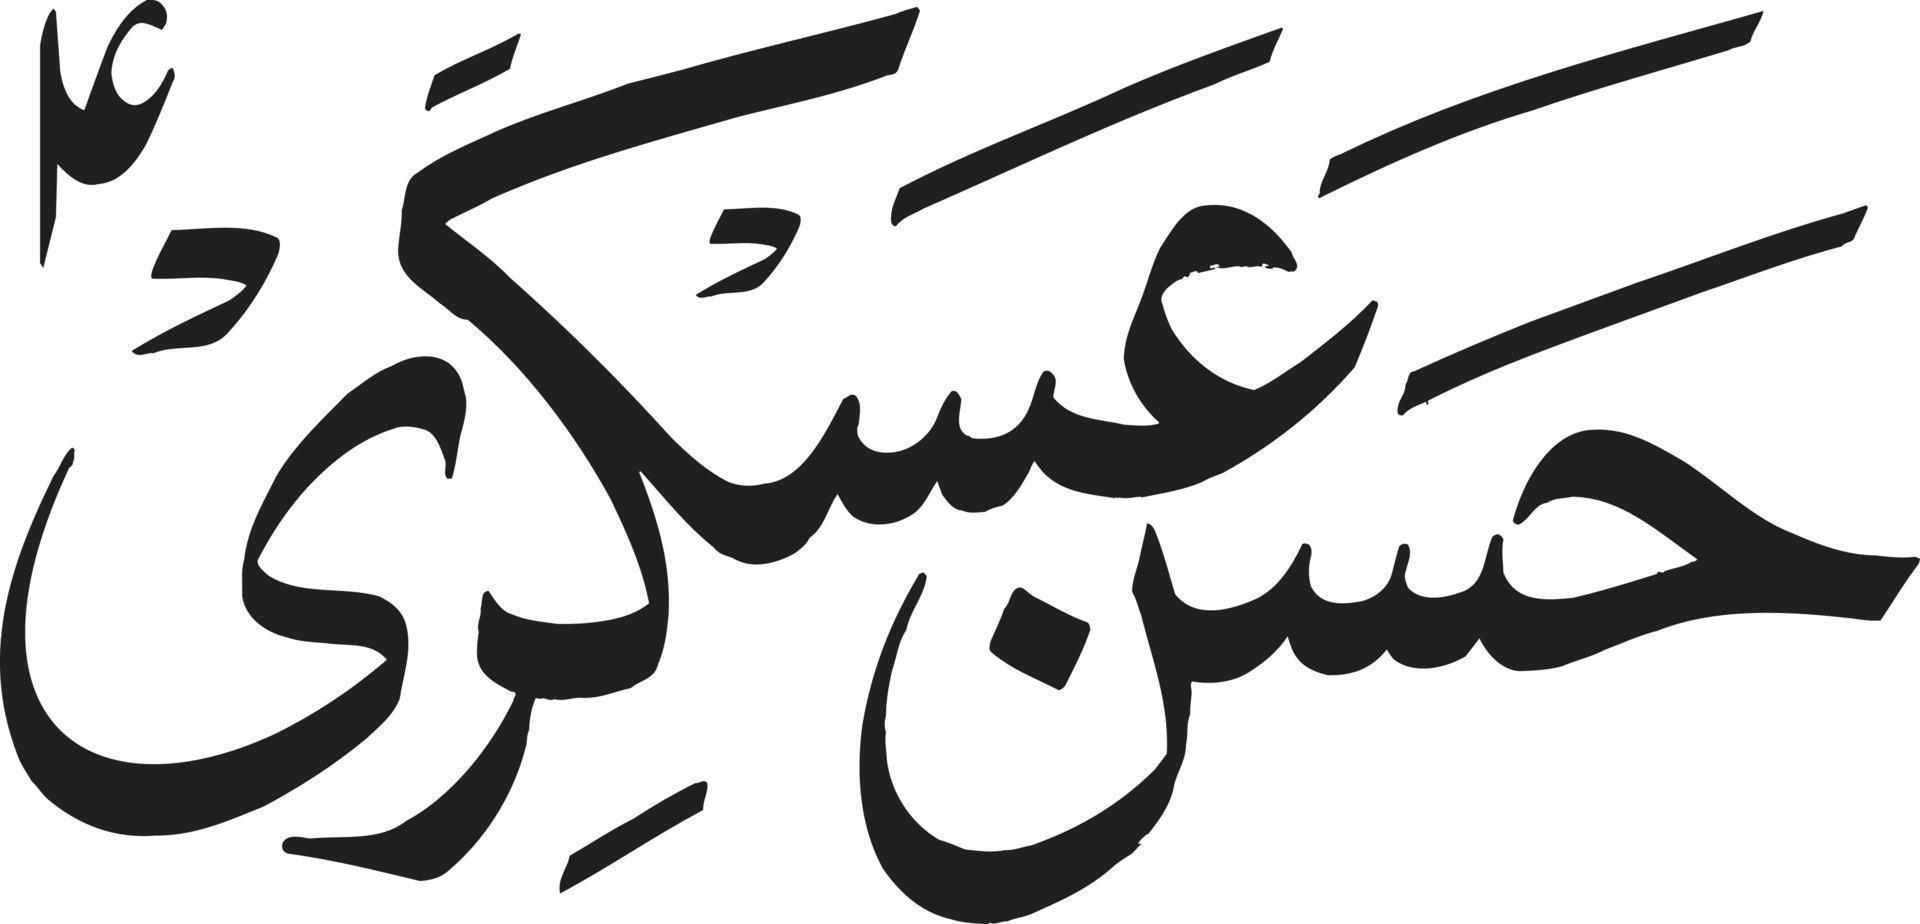 caligrafia árabe islâmica hussain askriy vetor livre